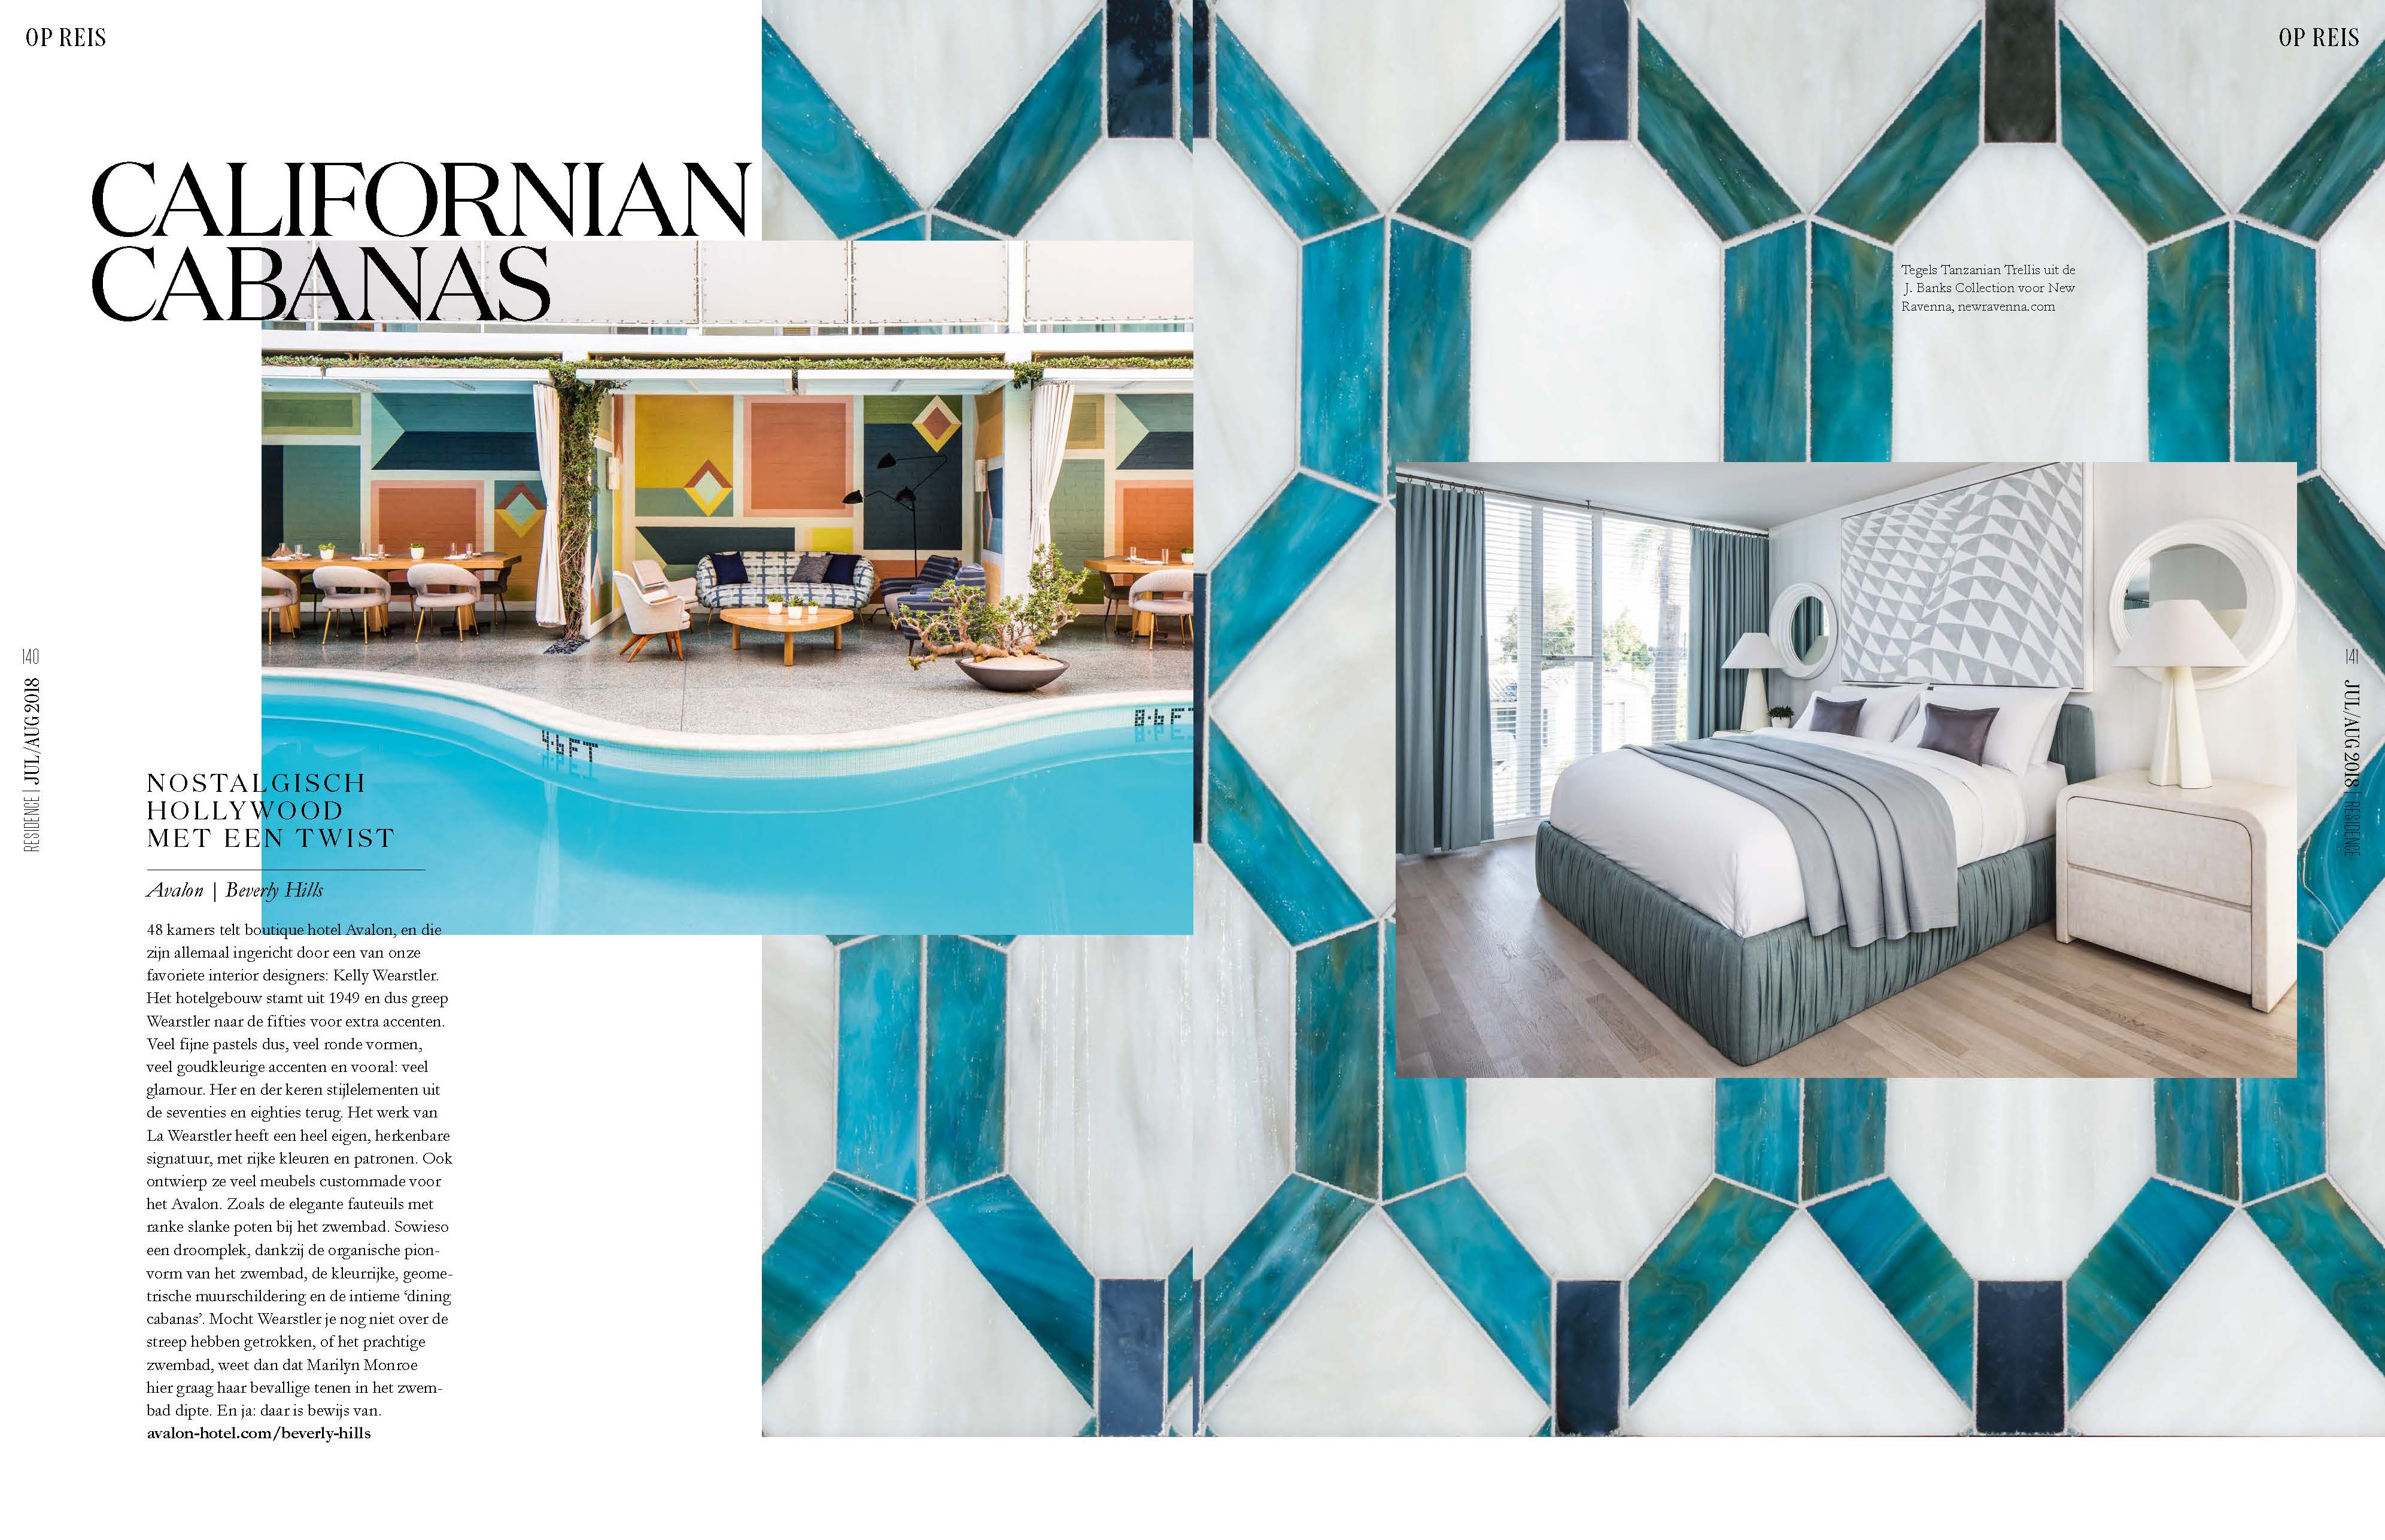 Tanzanian Trellis Grand mosaic by joni vanderslice for new ravenna featured in residence magazine